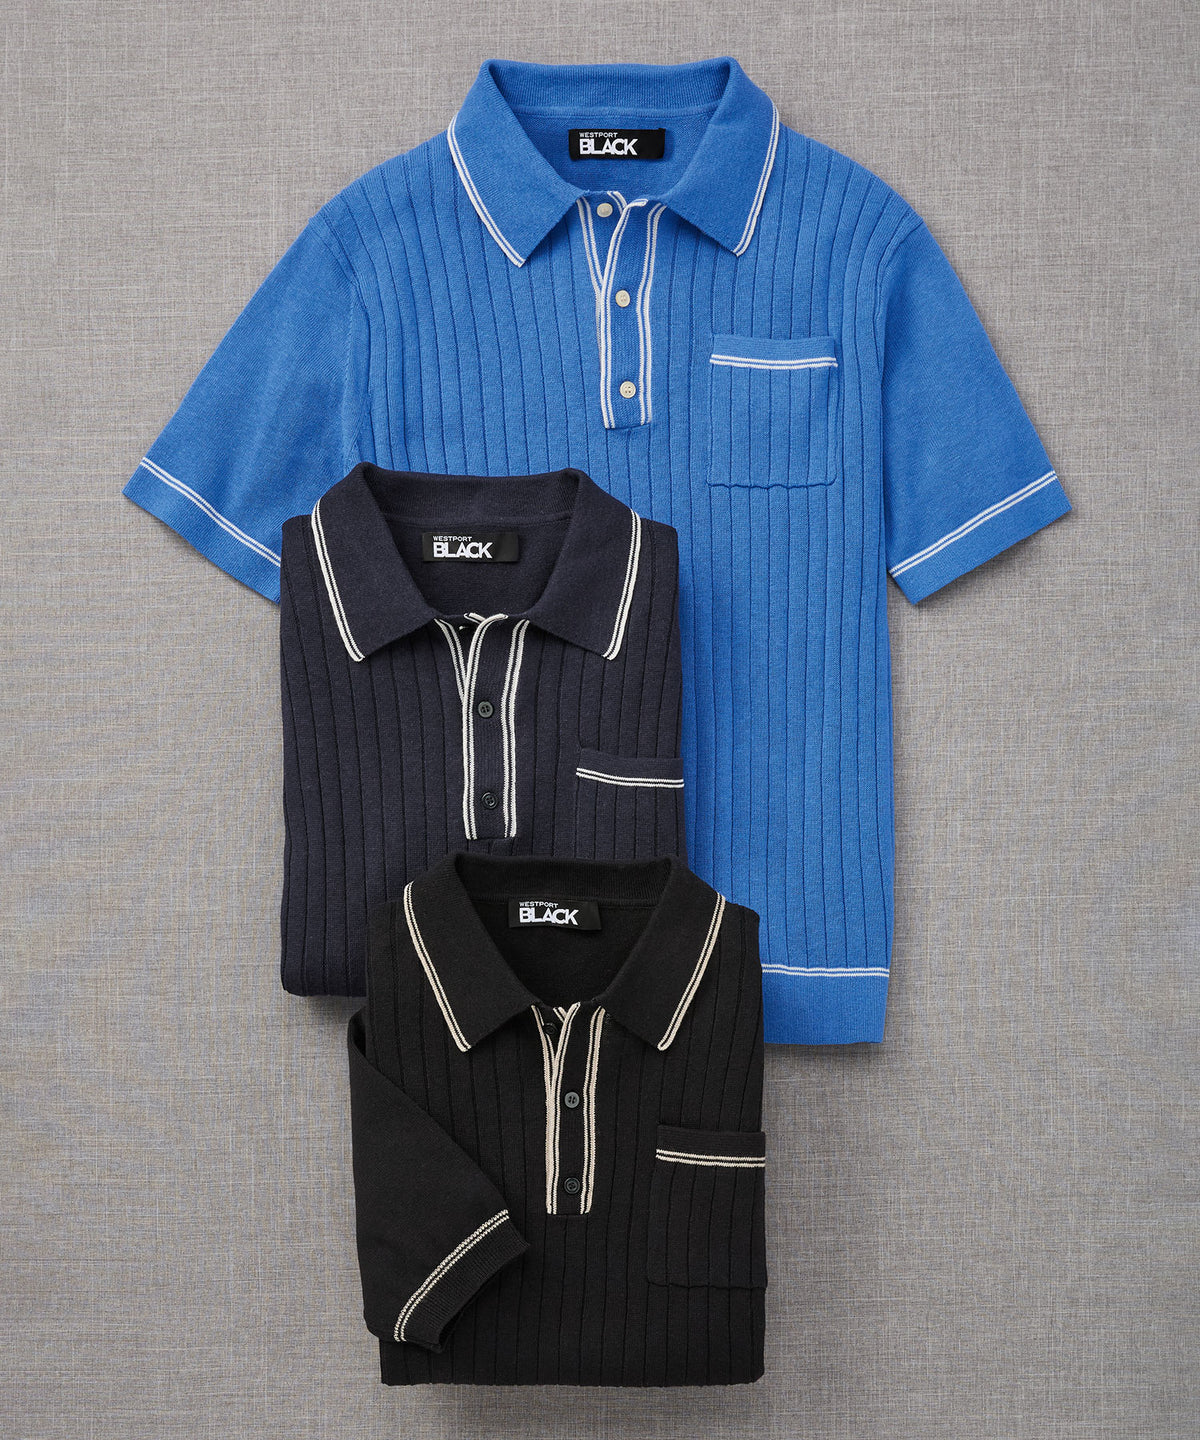 Westport Black Short Sleeve Amici Ribbed Knit Polo Knit Shirt, Men's Big & Tall